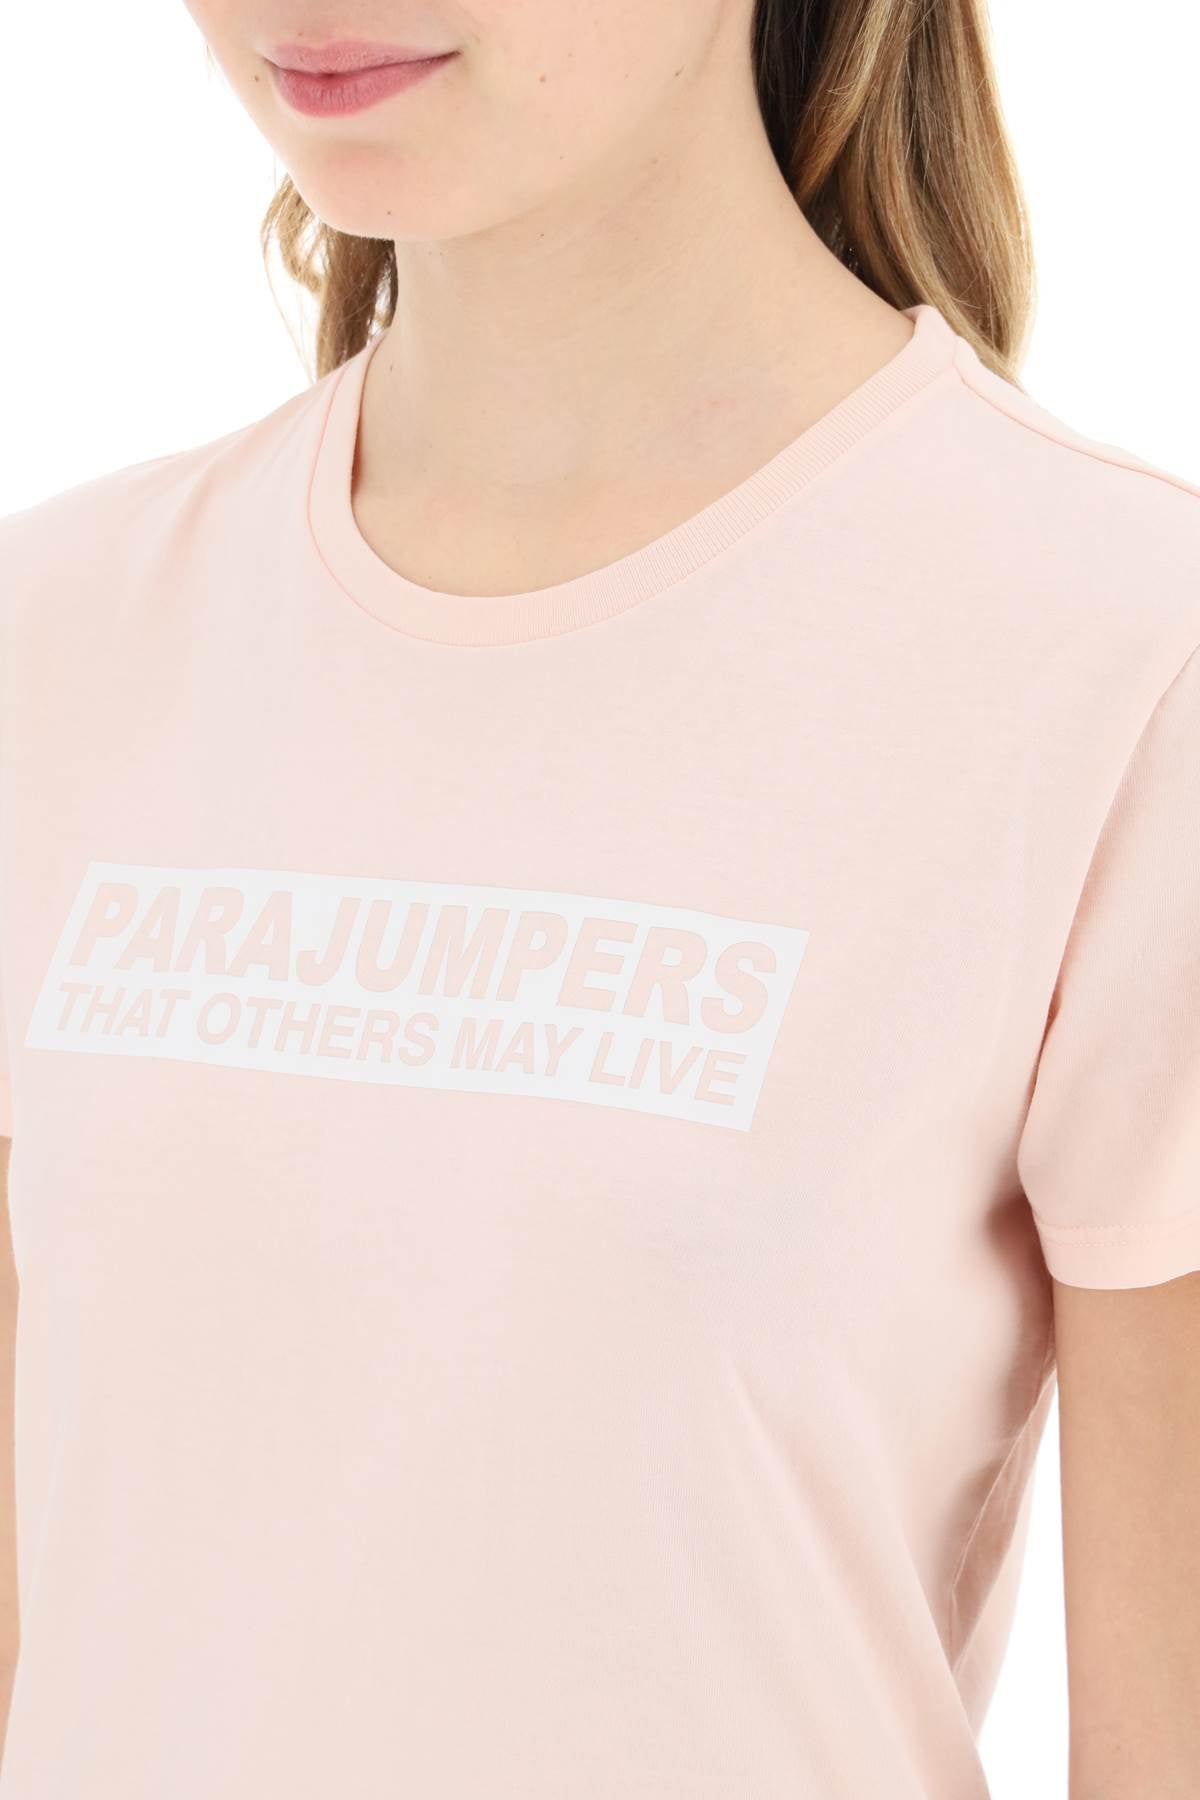 Parajumpers Parajumpers 'box' slim fit cotton t-shirt